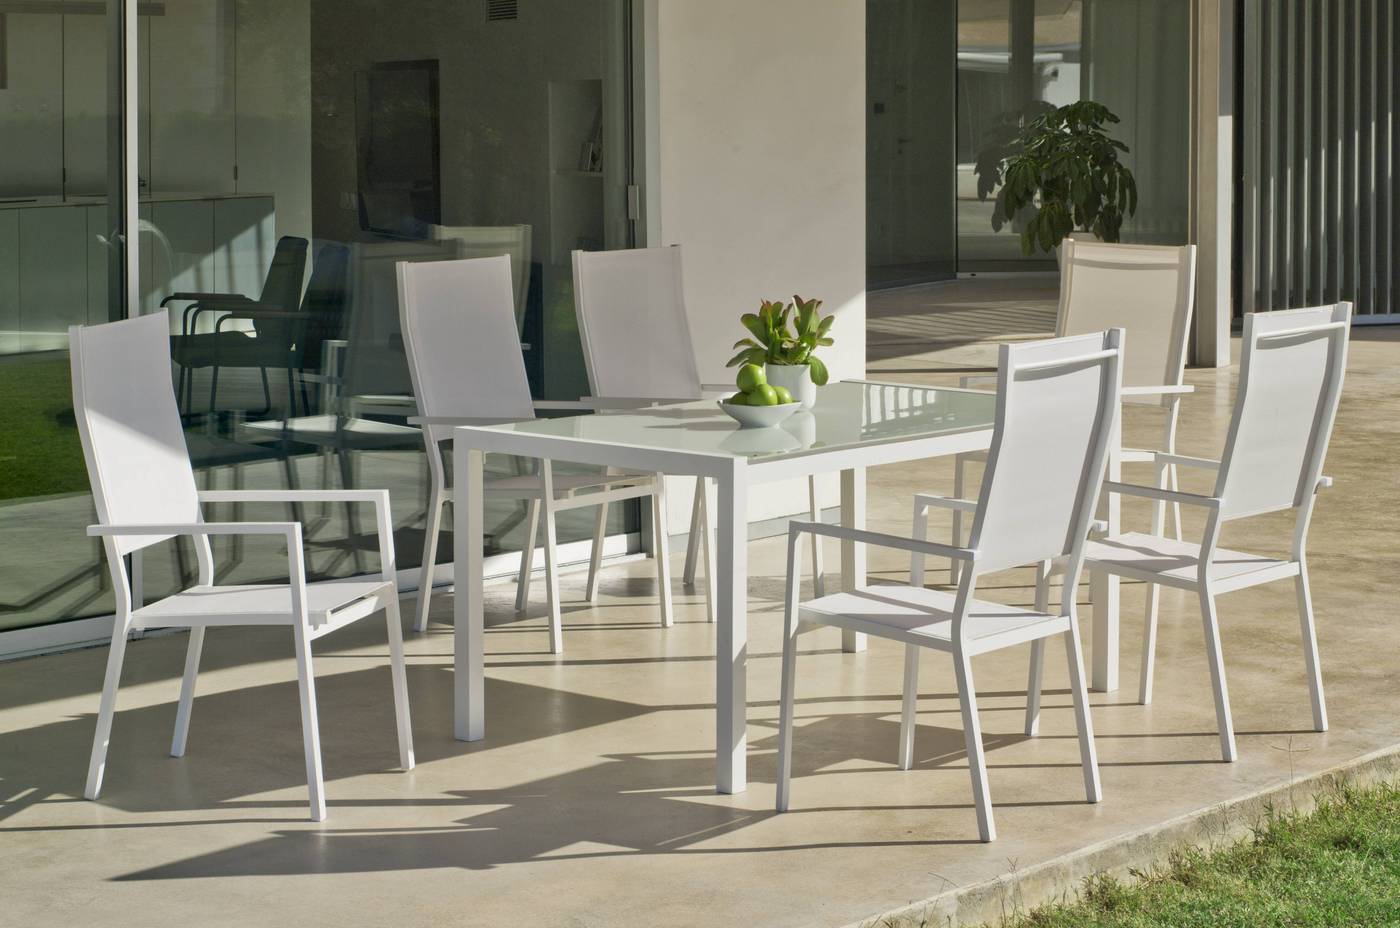 Set Aluminio Córcega-Janeiro 160-6 - Conjunto aluminio para jardín: Mesa rectangular 160 cm + 6 sillones altos de textilen. Disponible en color blanco, plata y antracita.